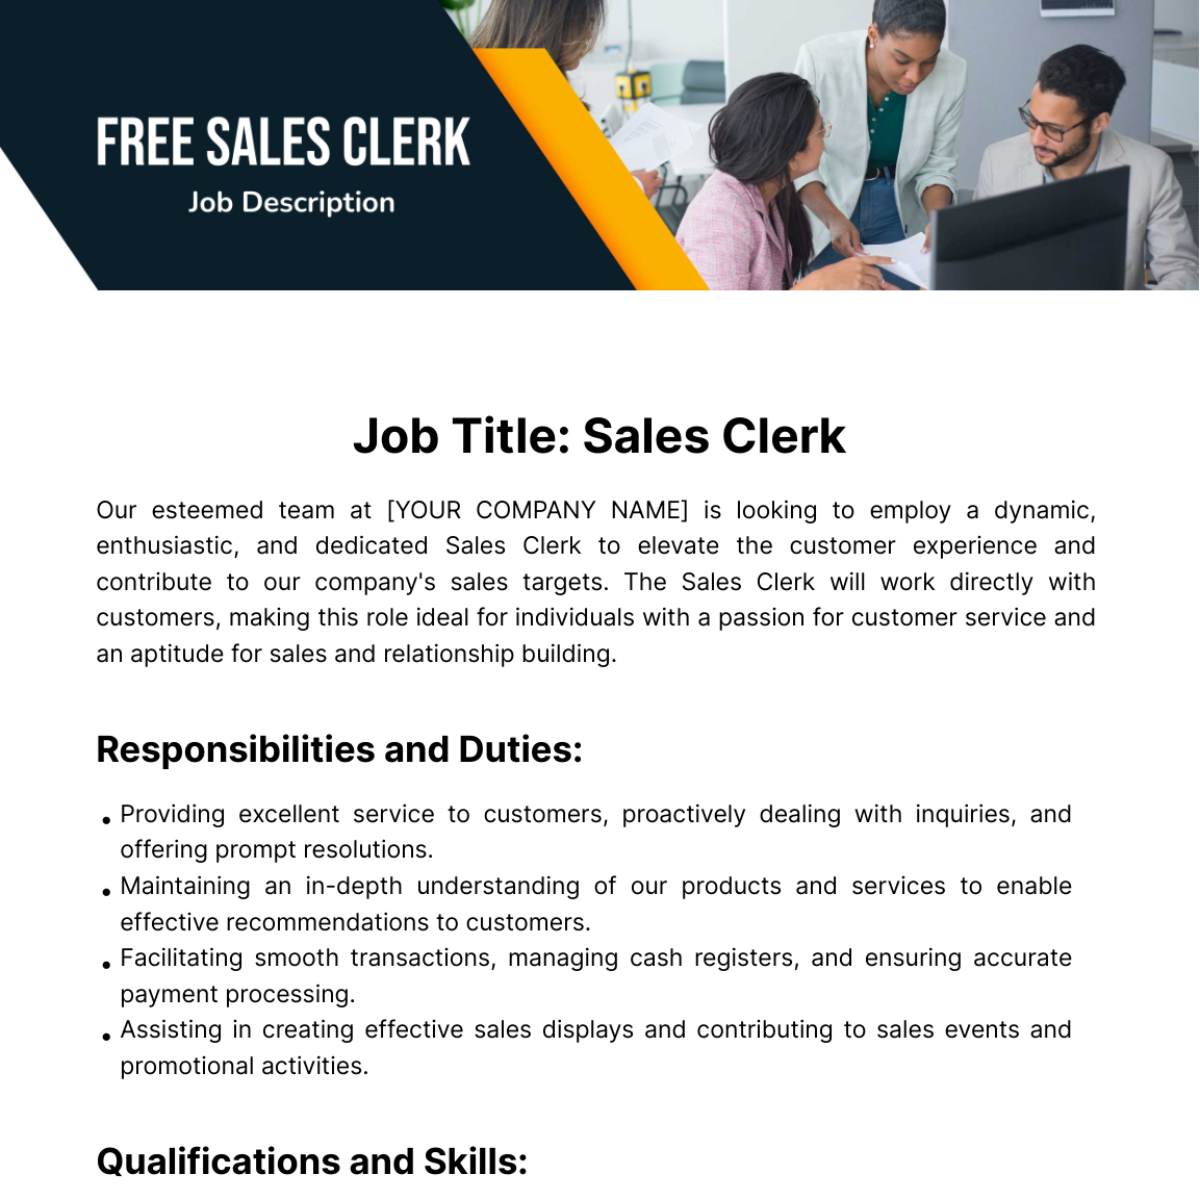 Free Sales Clerk Job Description Template